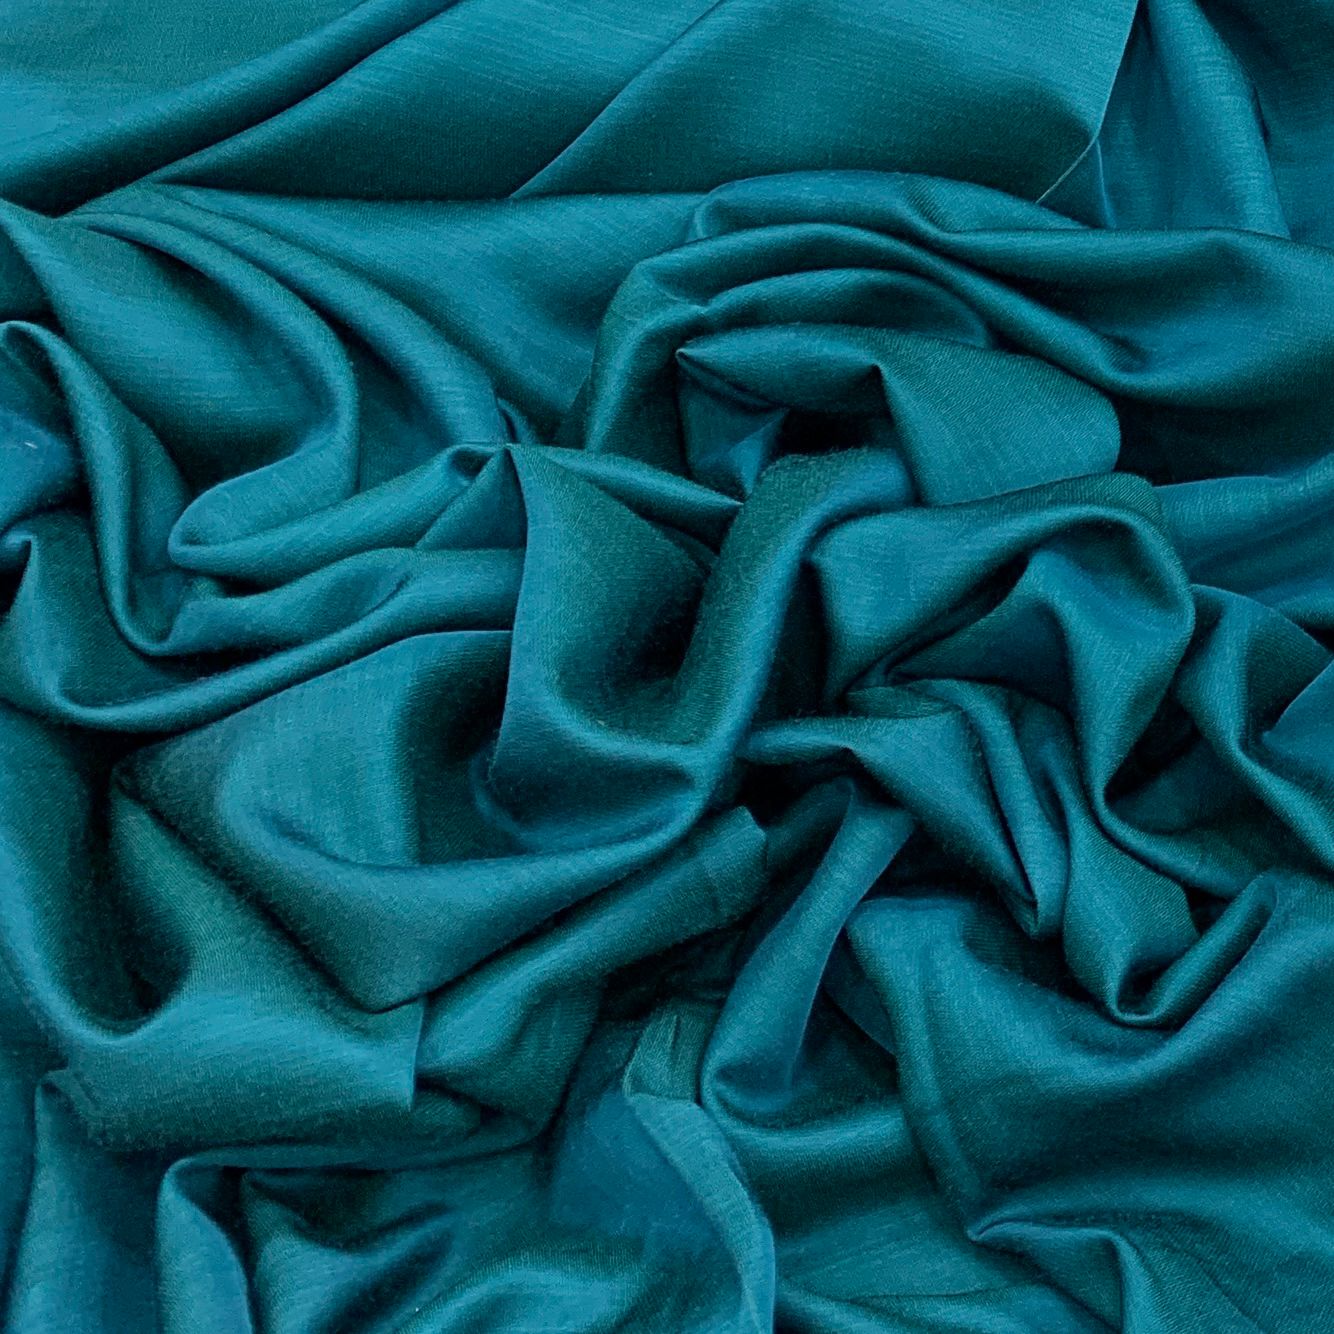 Bluish Green Plain Satin Linen Fabric